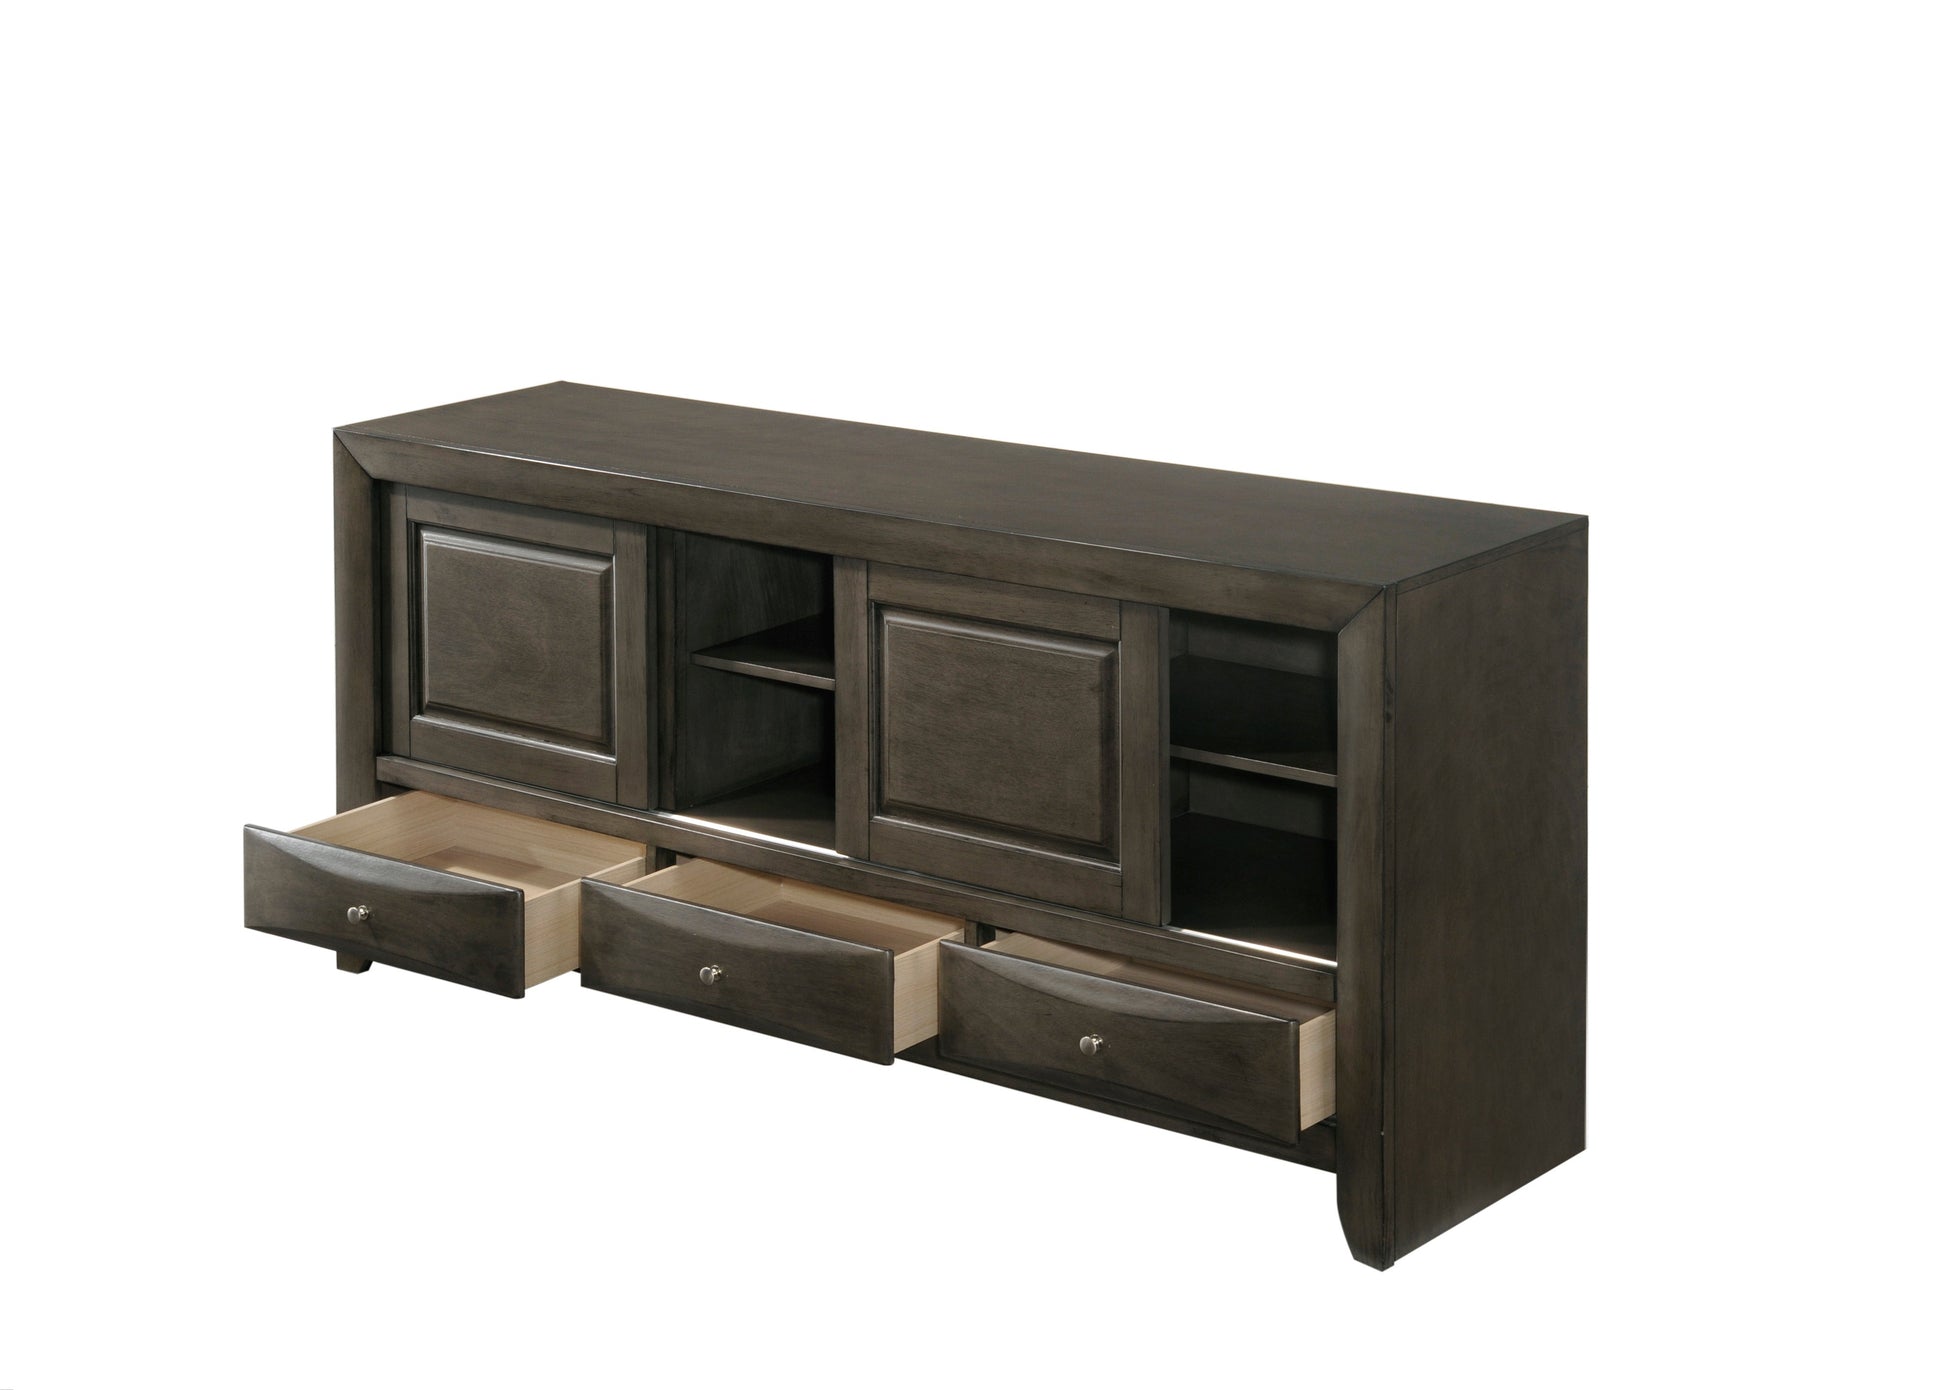 Emily Gray Oak Sleek Contemporary Modern Transitional Storage Platform Bedroom Set